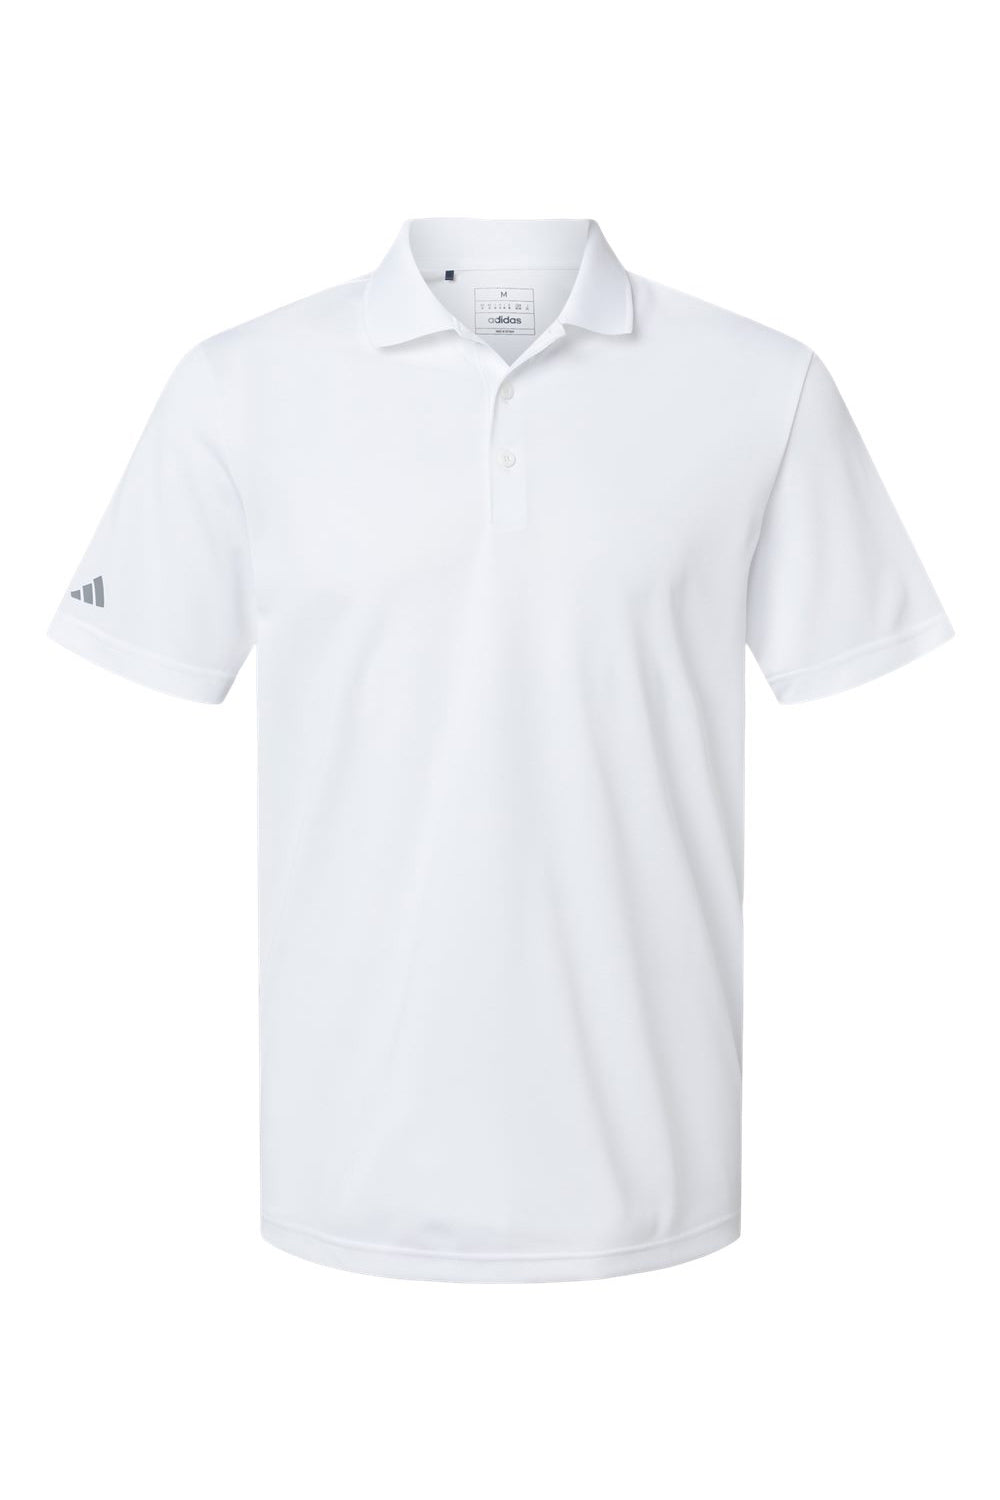 Adidas A430 Mens UV Protection Short Sleeve Polo Shirt White Flat Front